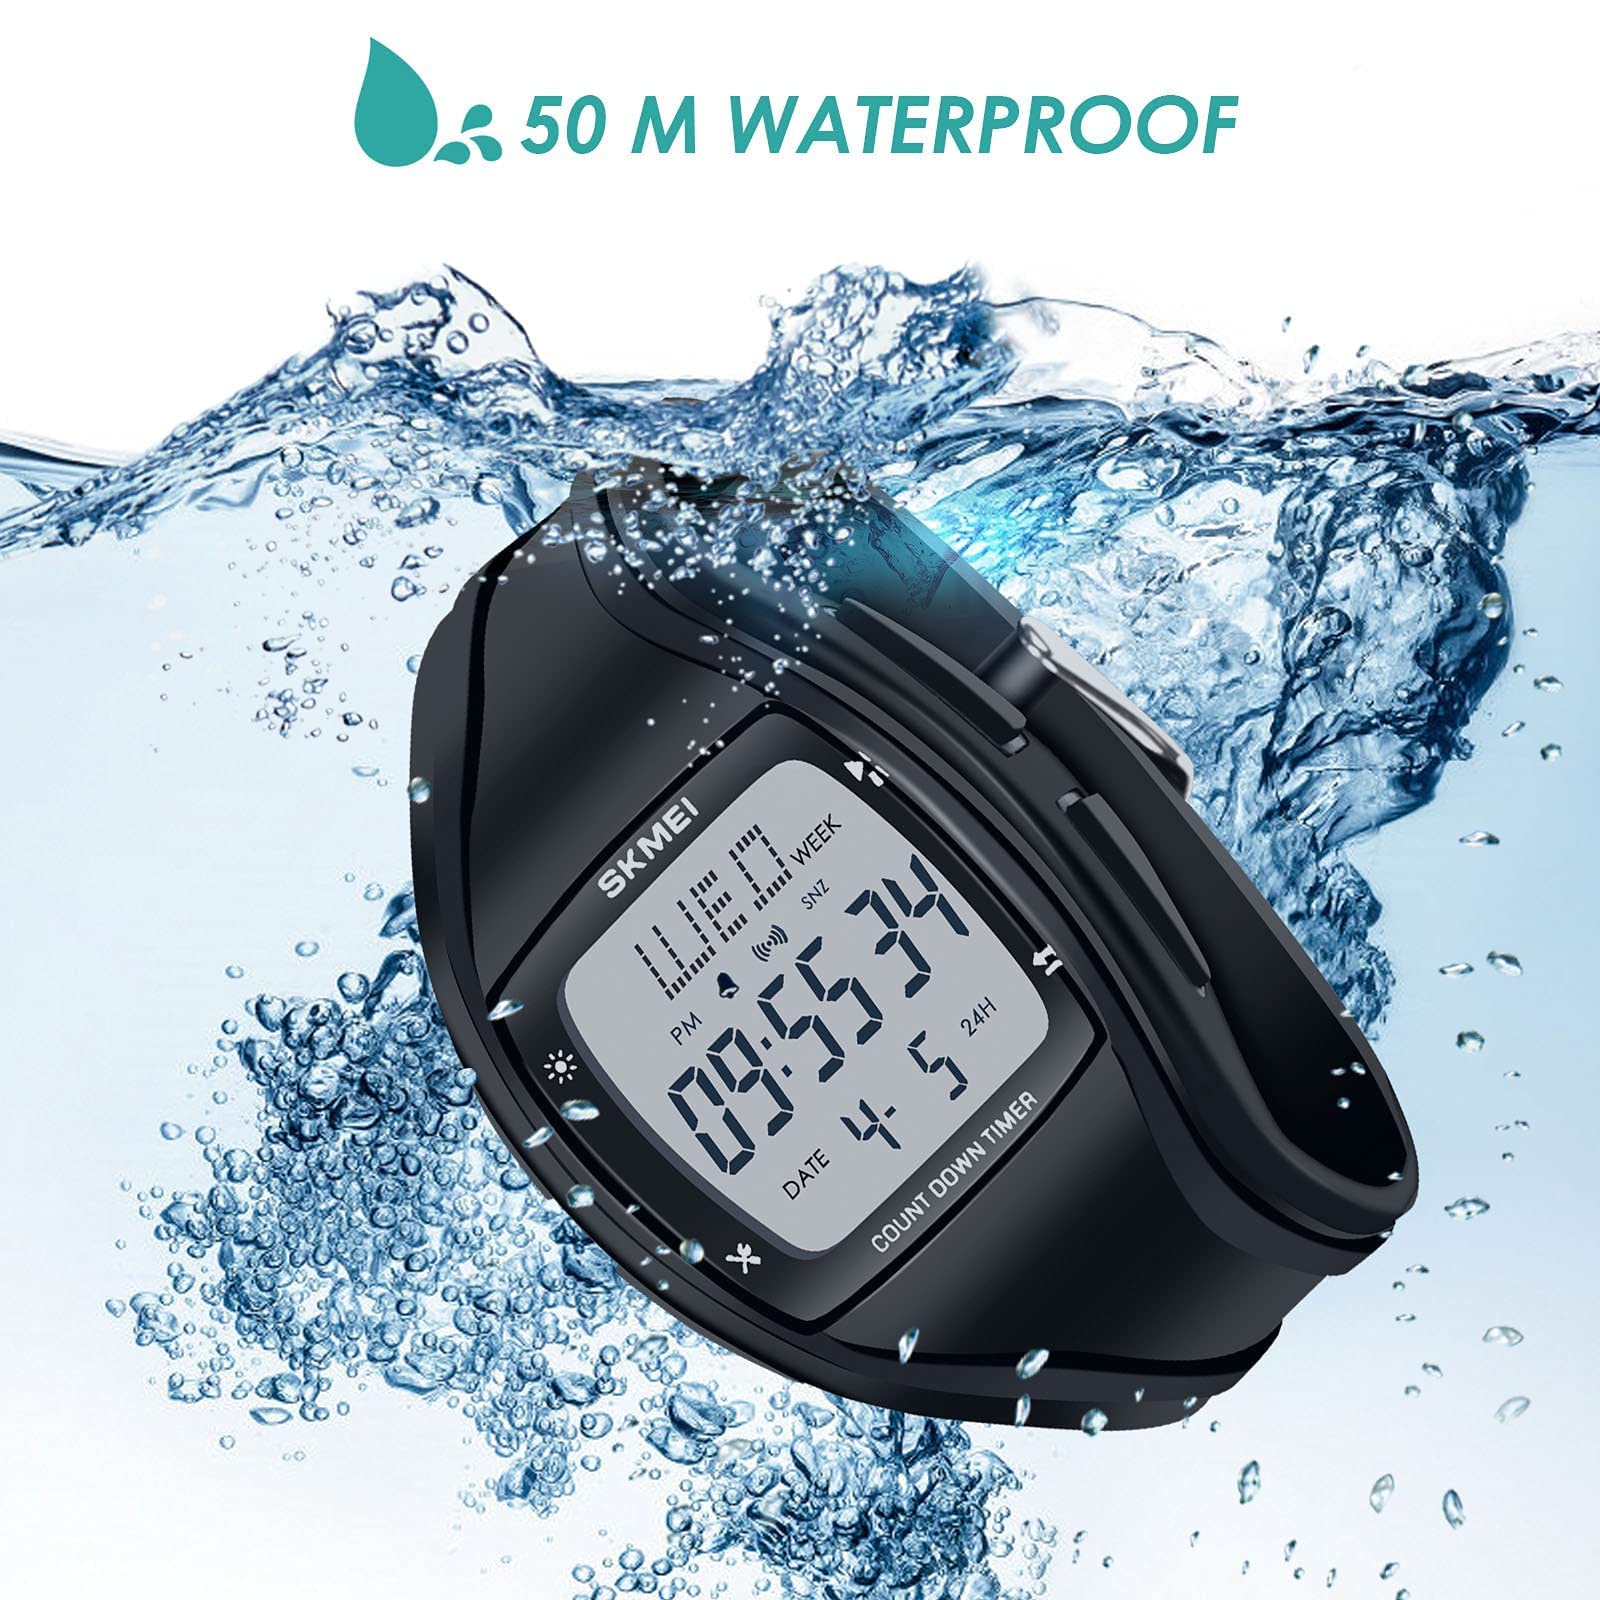 CakCity Mens Digital Sport Watches for Men Wrist Watches for Men with Alarm Stopwatch Waterproof